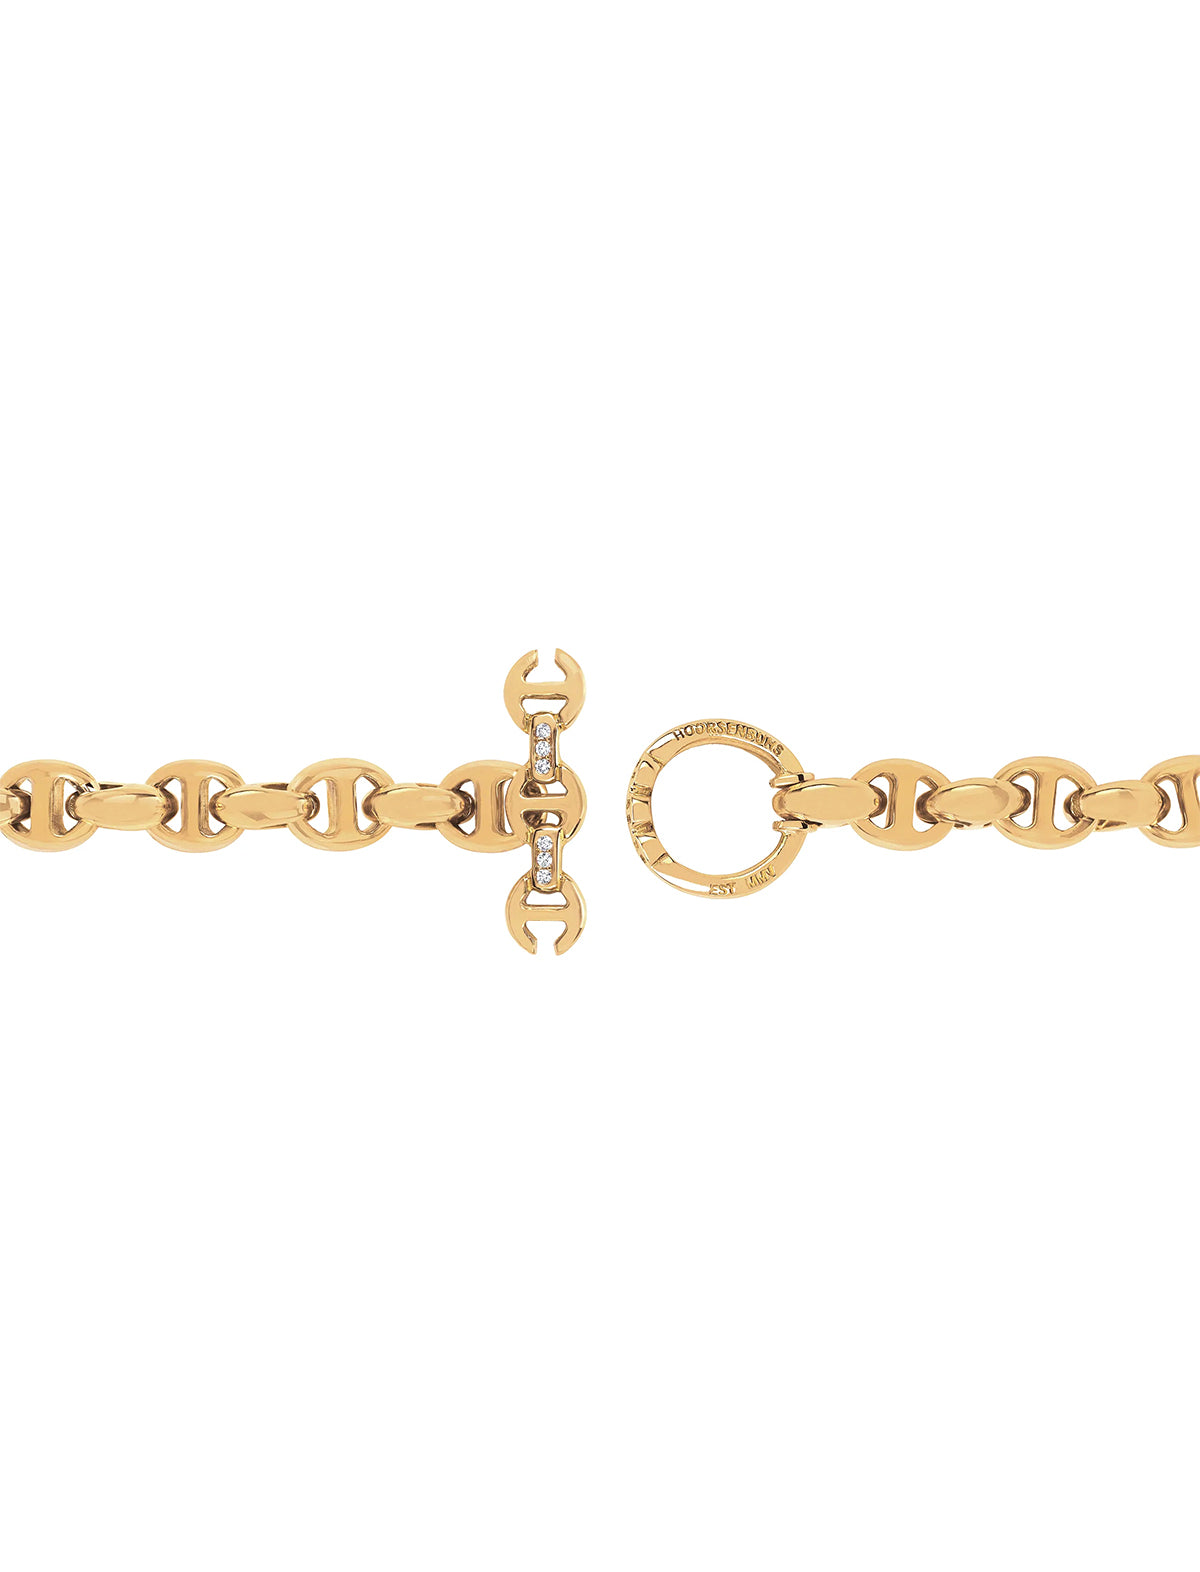 HOORSENBUHS 5mm Open-Link™ Necklace w/ Seven 10mm Links w/ Diamonds 18k Yellow Gold